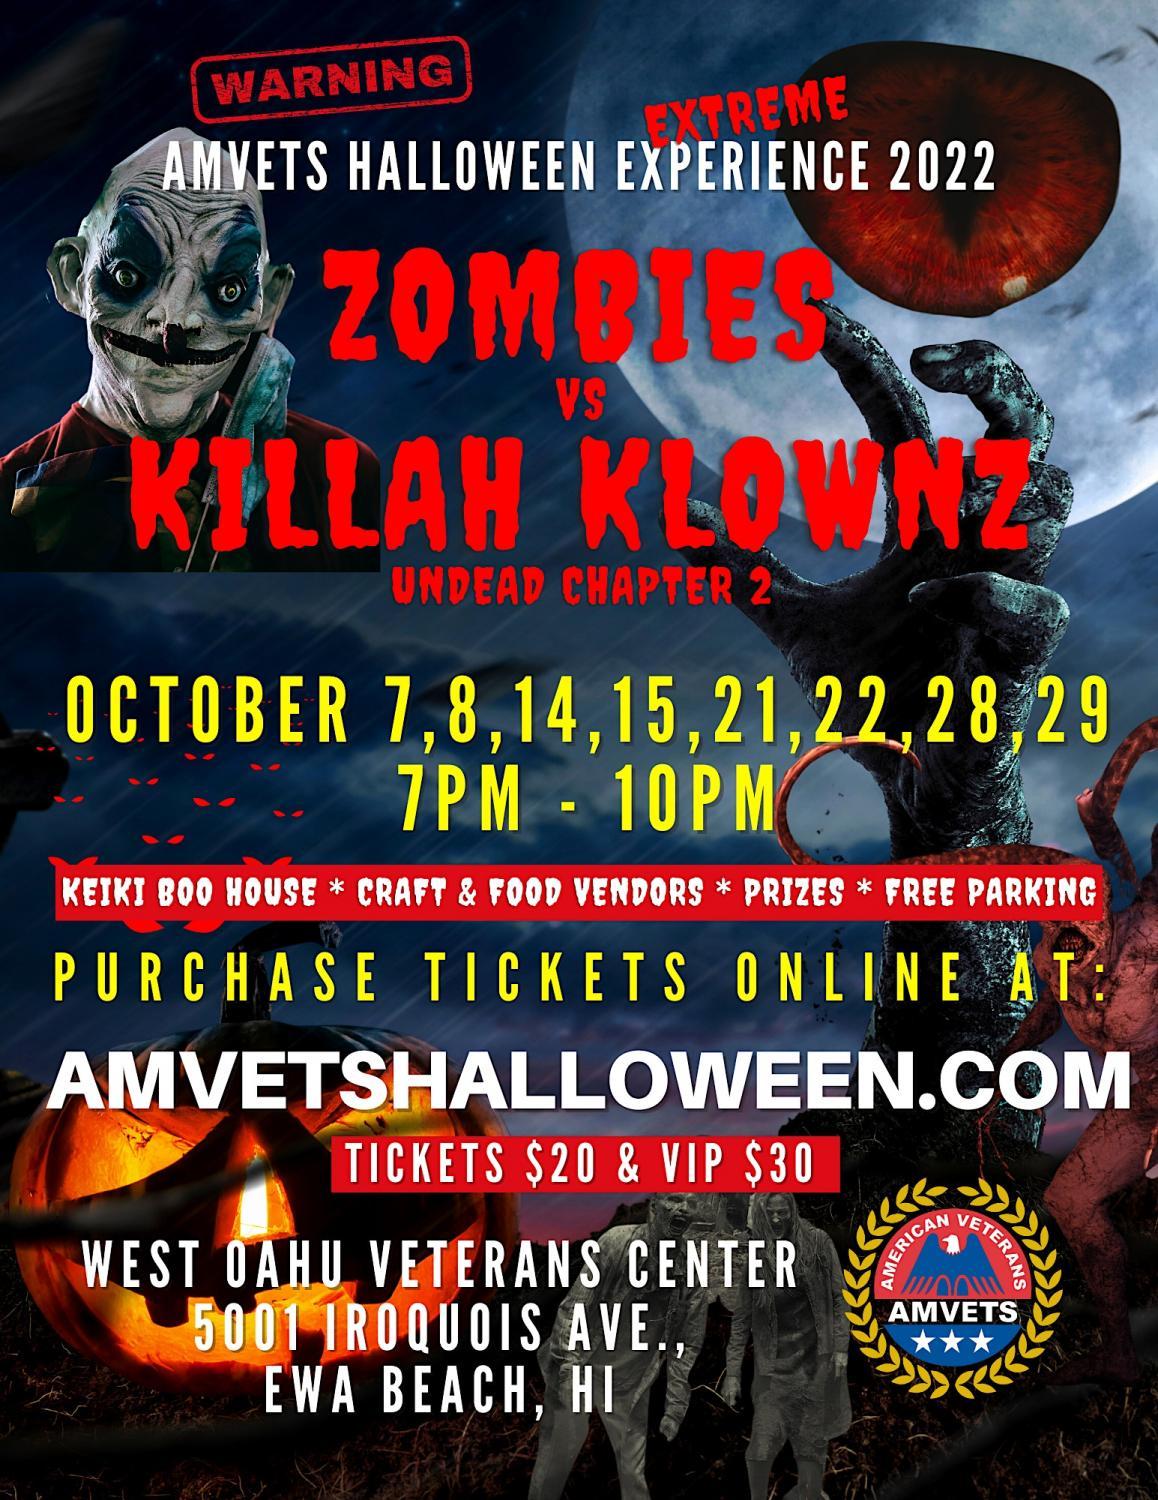 Halloween Extreme Experience - Zombies vs Killah Klownz Undead Chapter 2
Fri Oct 21, 7:00 PM - Fri Oct 21, 10:00 PM